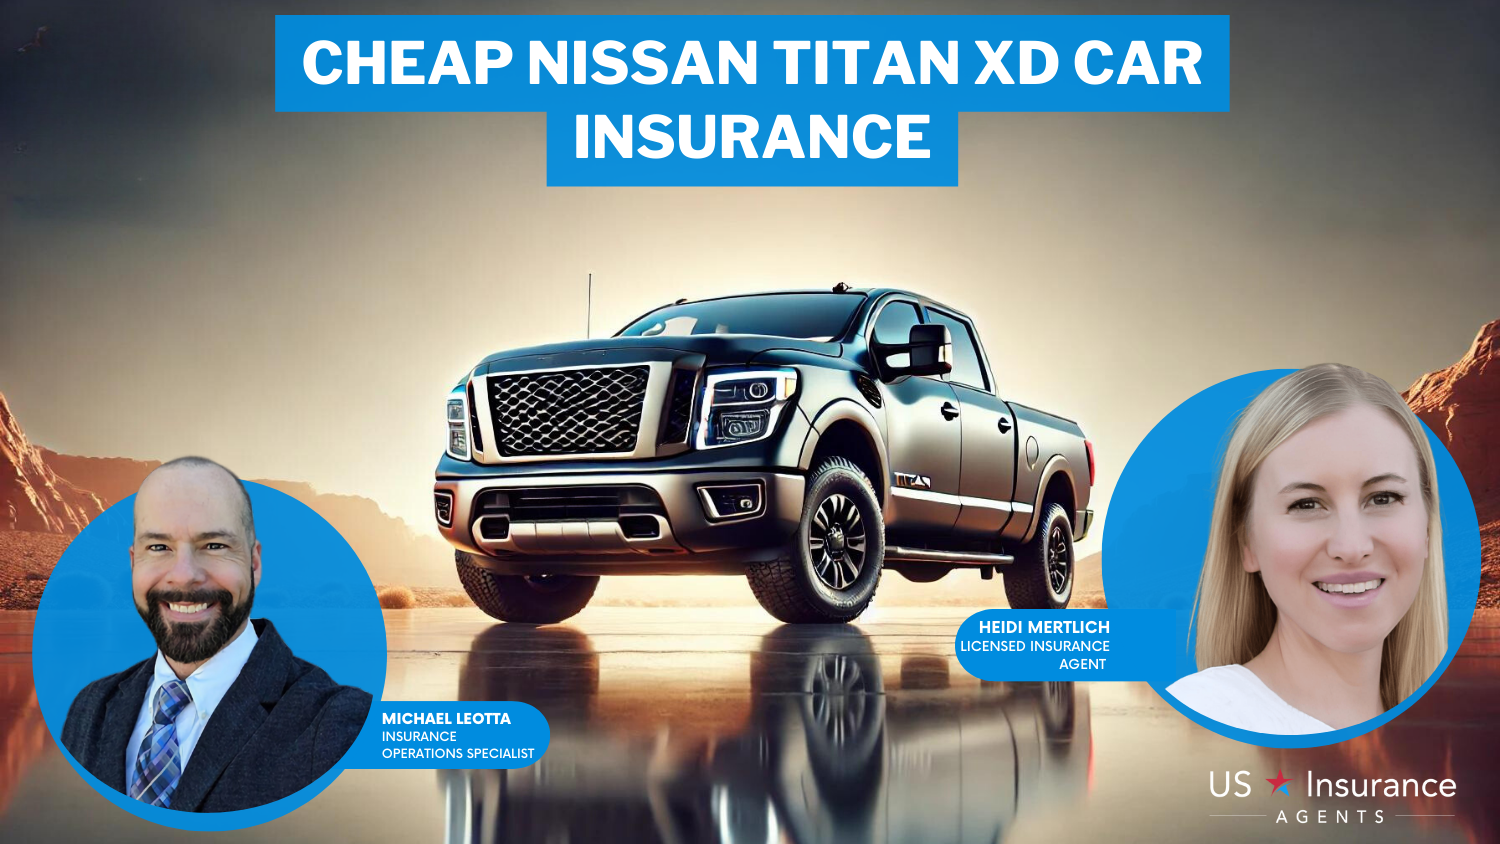 Cheap Nissan TITAN XD Car Insurance: The General, Progressive, and Mercury